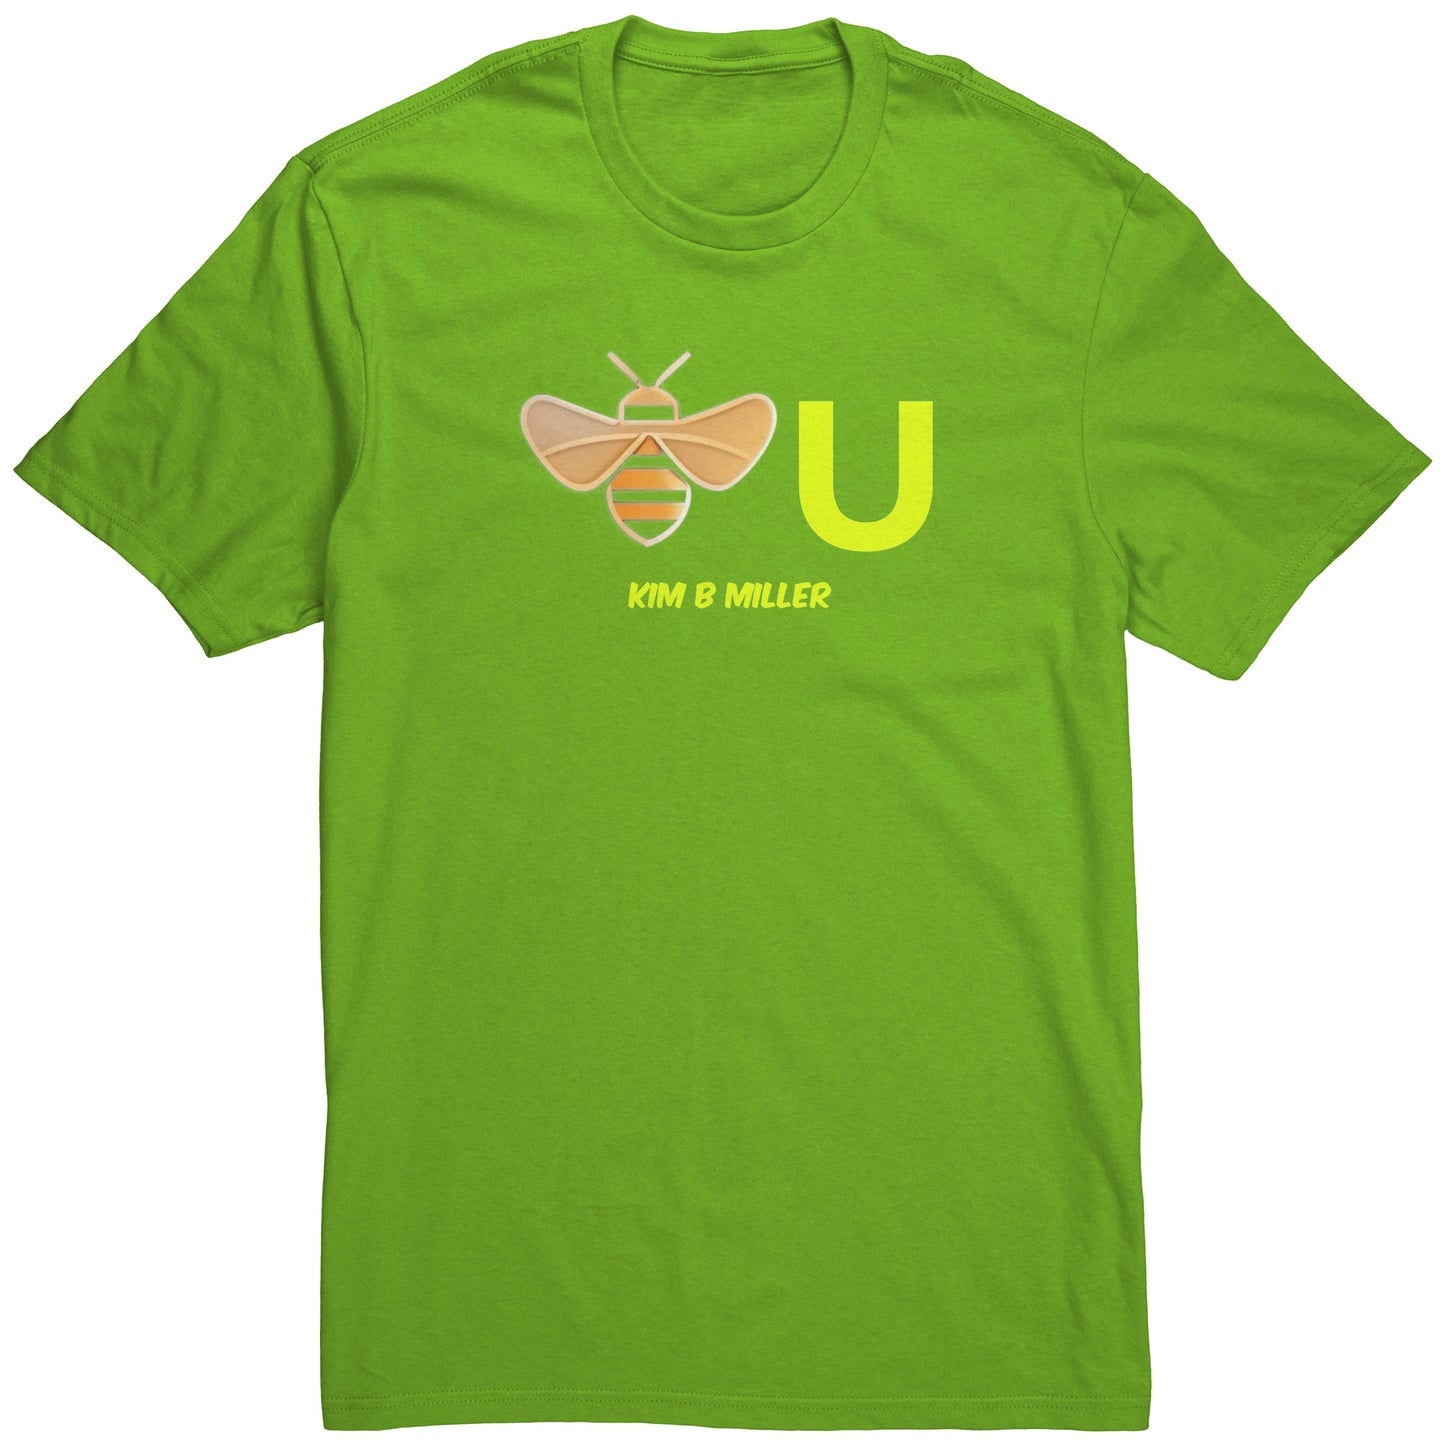 "Bee" You District Men's Shirt B